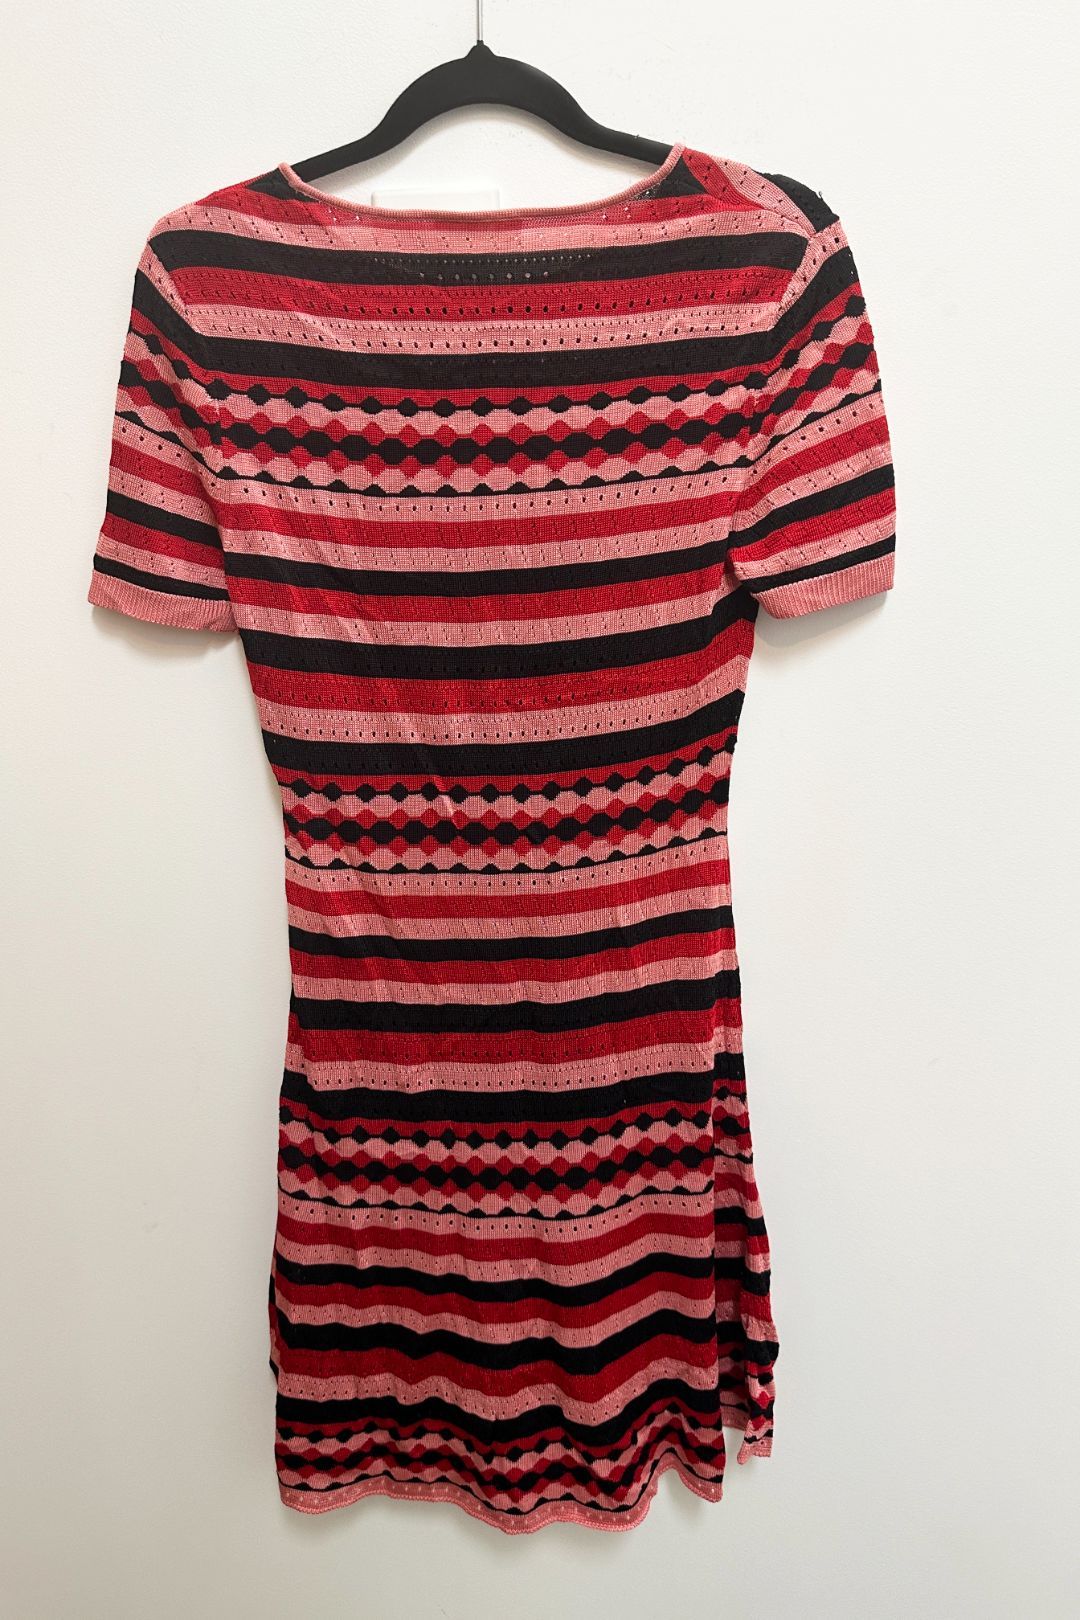 Kookai Majorca Fitted Knit Striped Dress in Multi